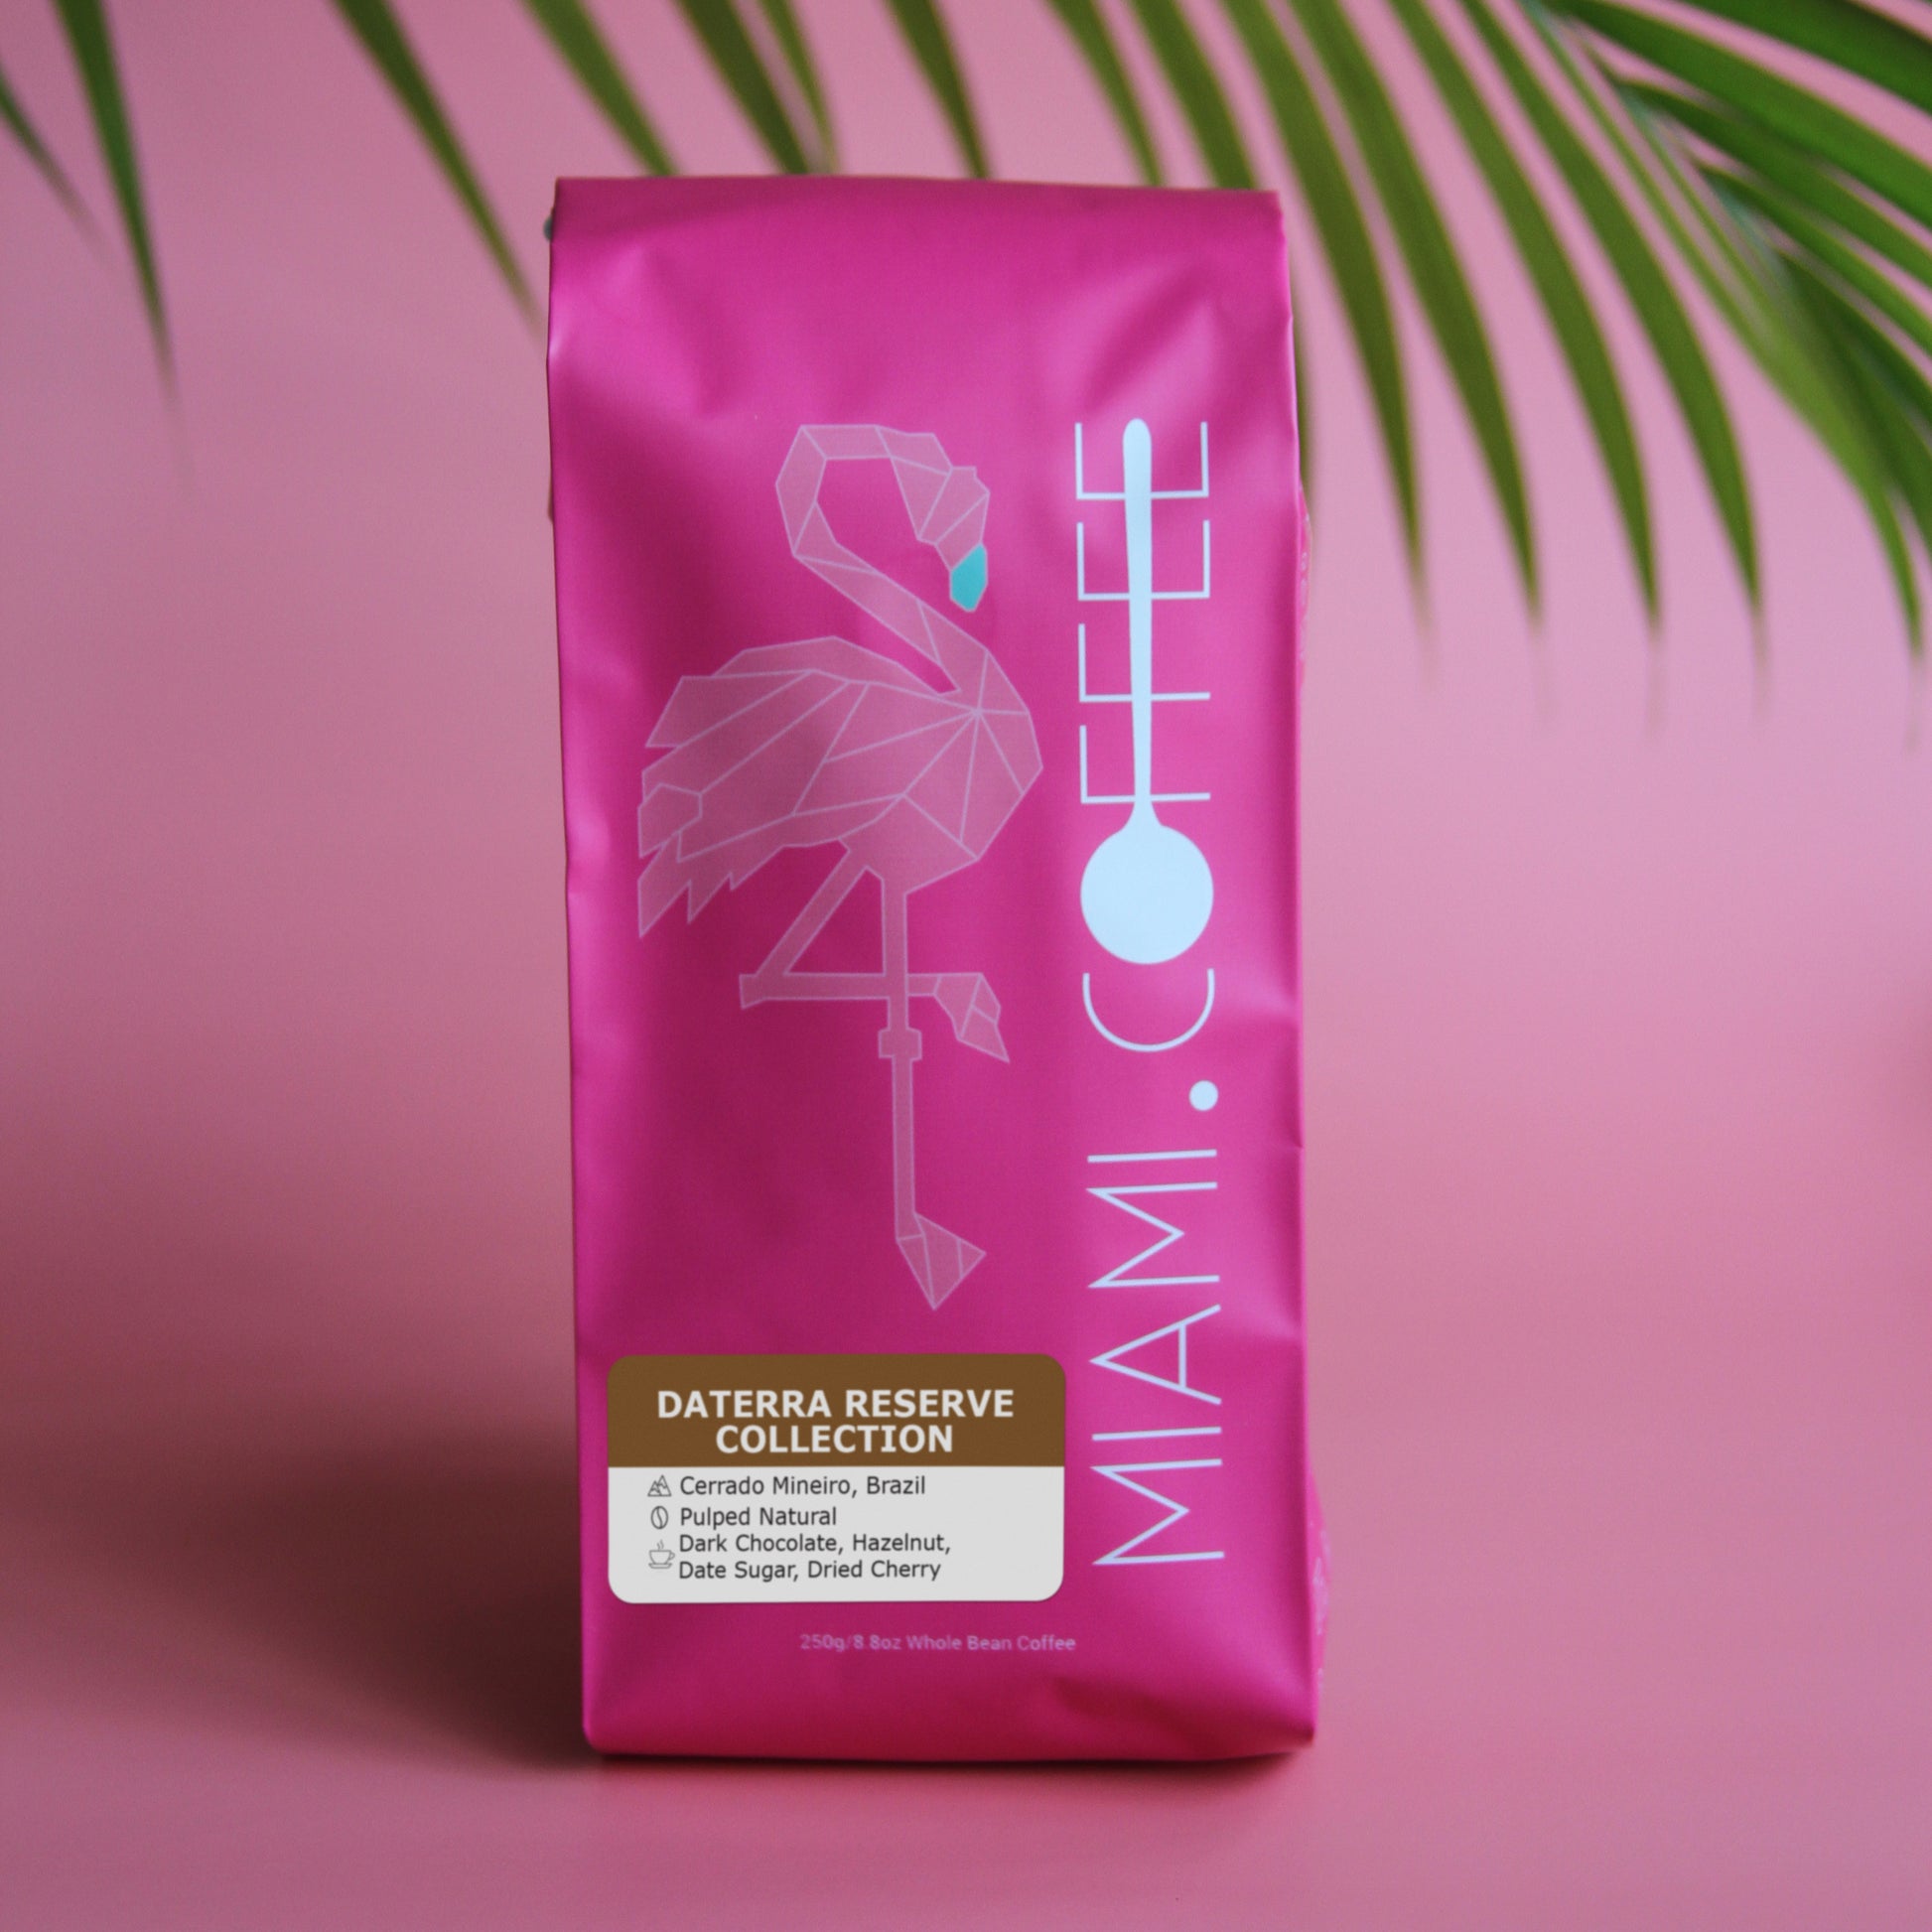 250 gram bag of Miami dot Coffee Daterra Reserve Collection from Cerrado Mineiro, Brazil, Pulped Natural Process, Tasting Notes of Dark Chocolate, Hazelnut, Date sugar, Dried cherry